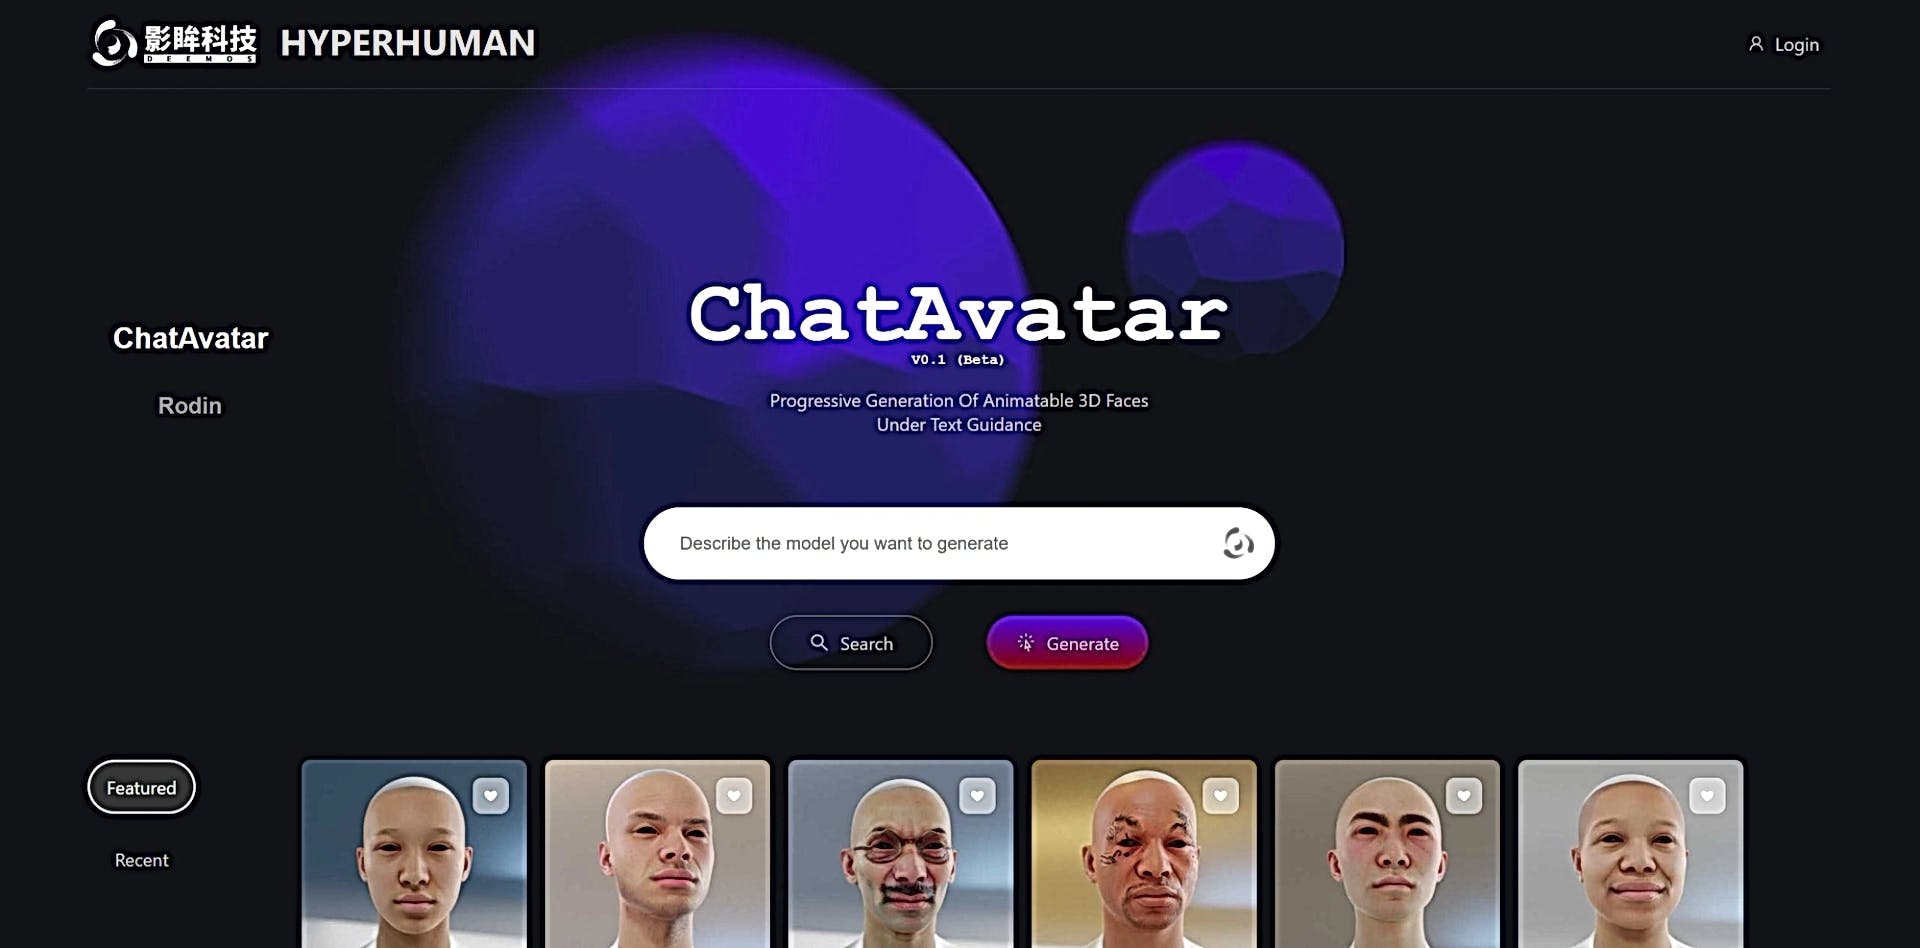 ChatAvatar featured